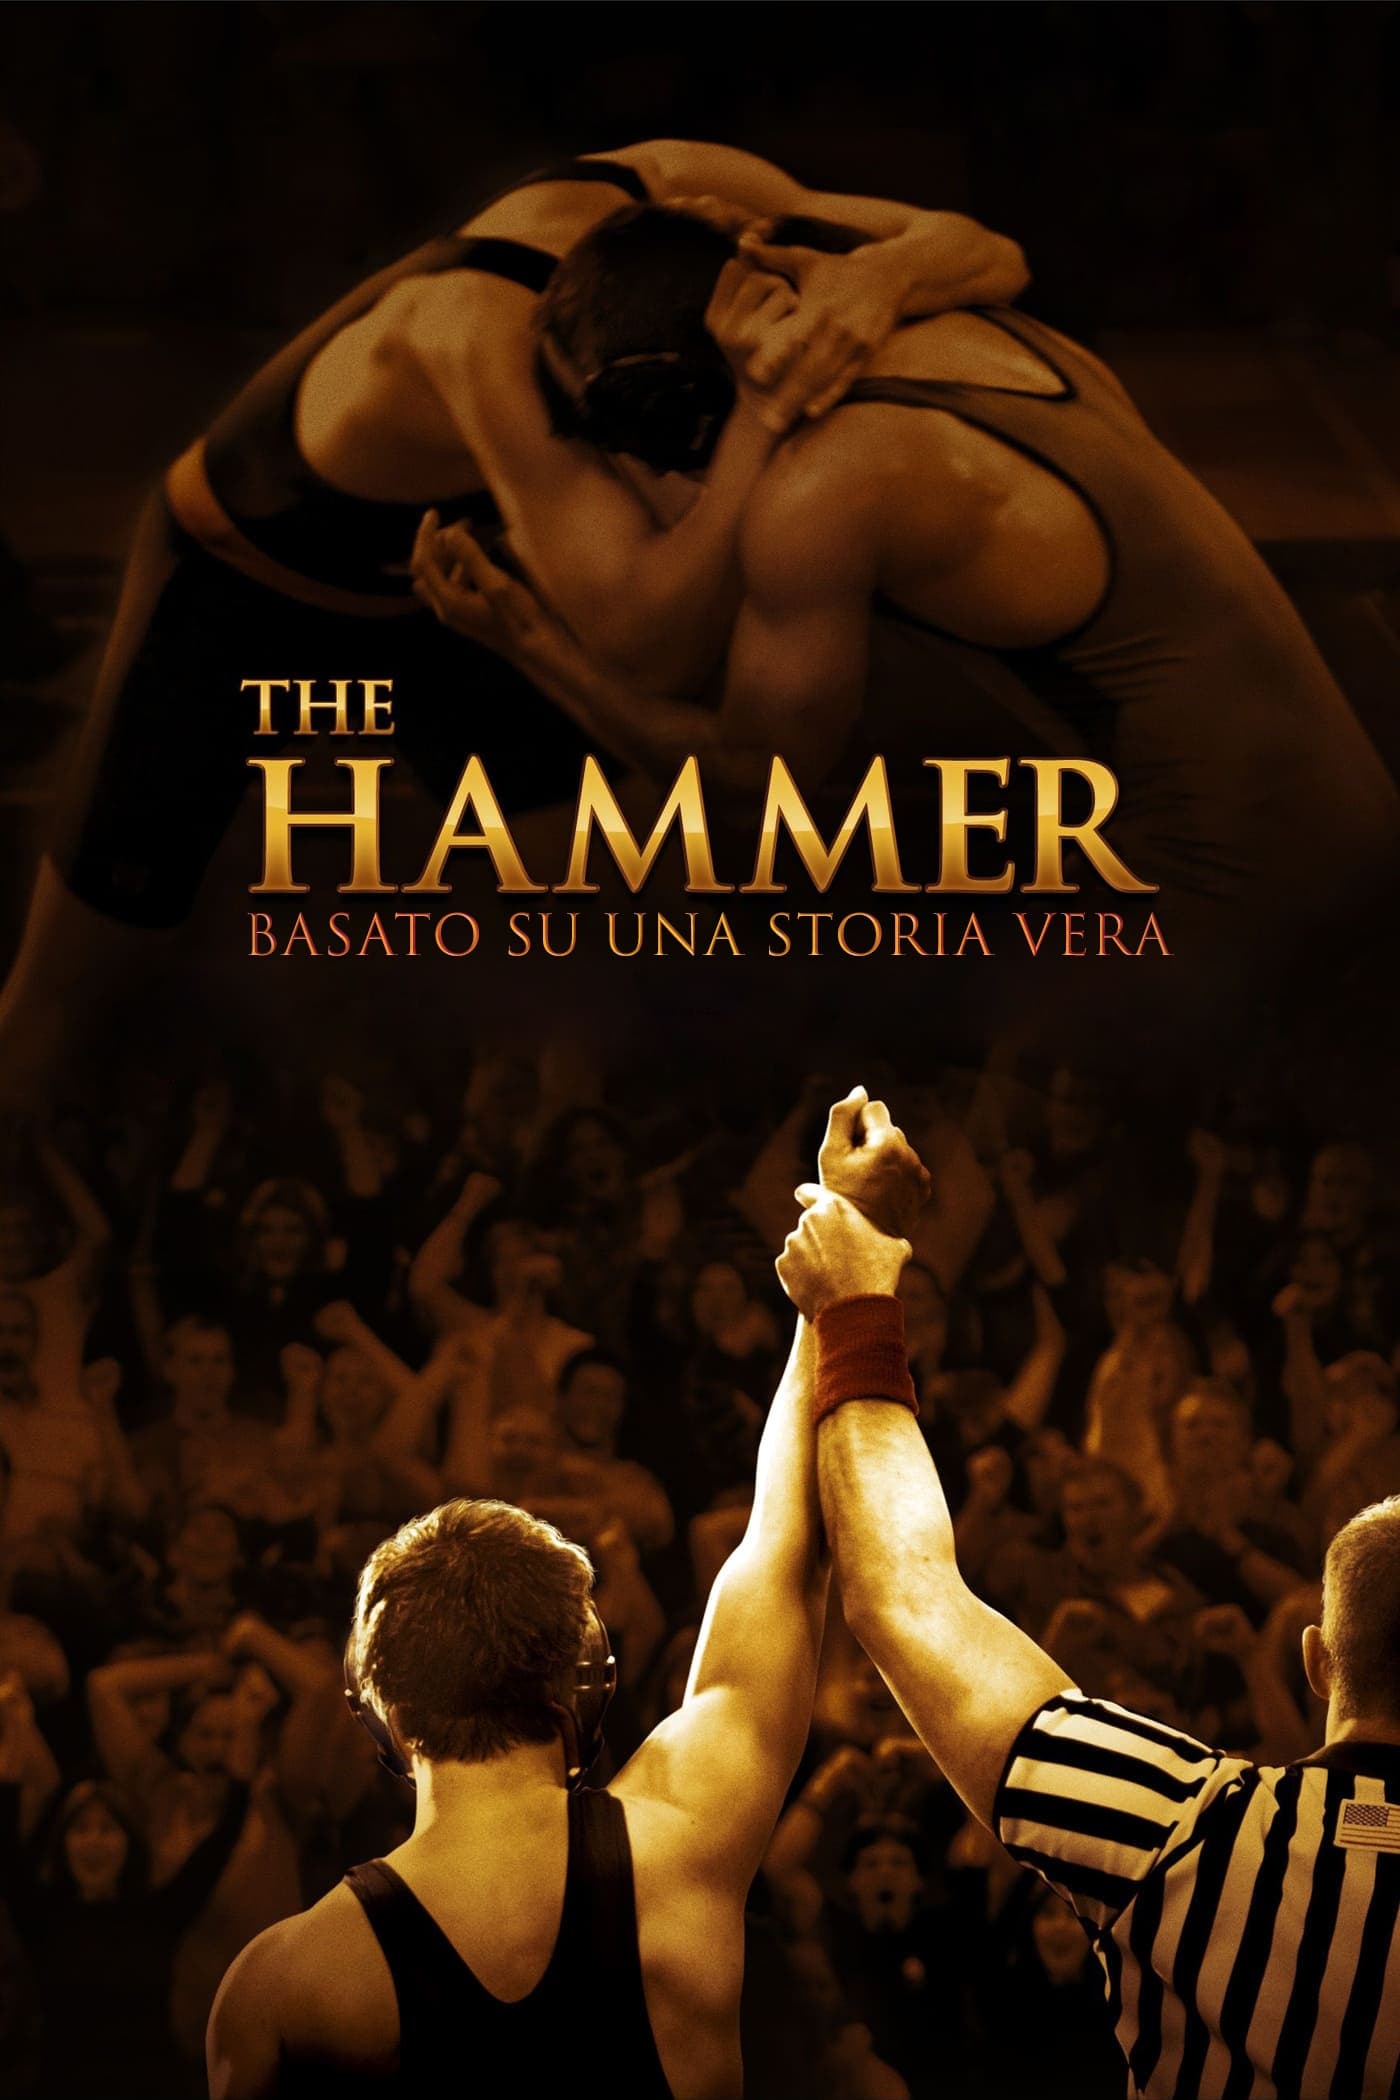 The Hammer (2010)